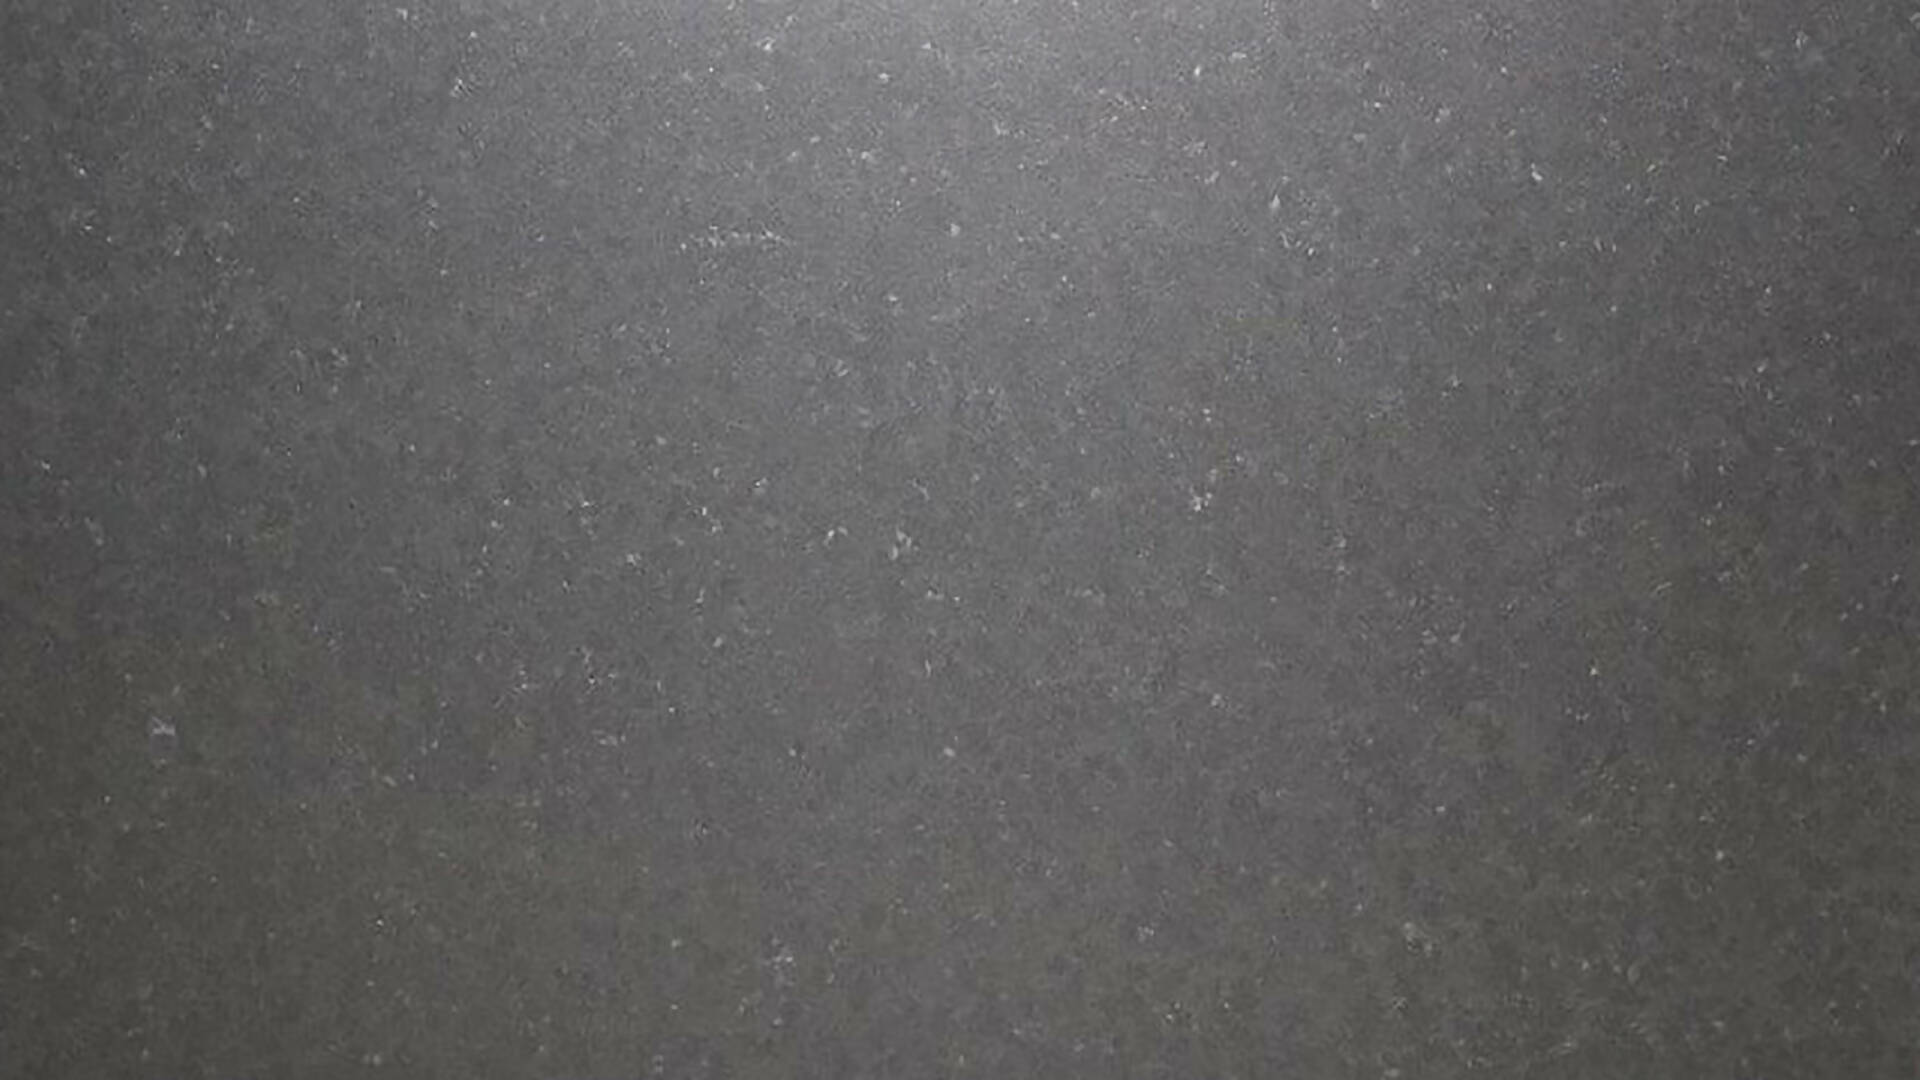 MIST BLACK / MORNING STORM LEATHER GRANITE,Granite,KSG UK LTD,www.work-tops.com